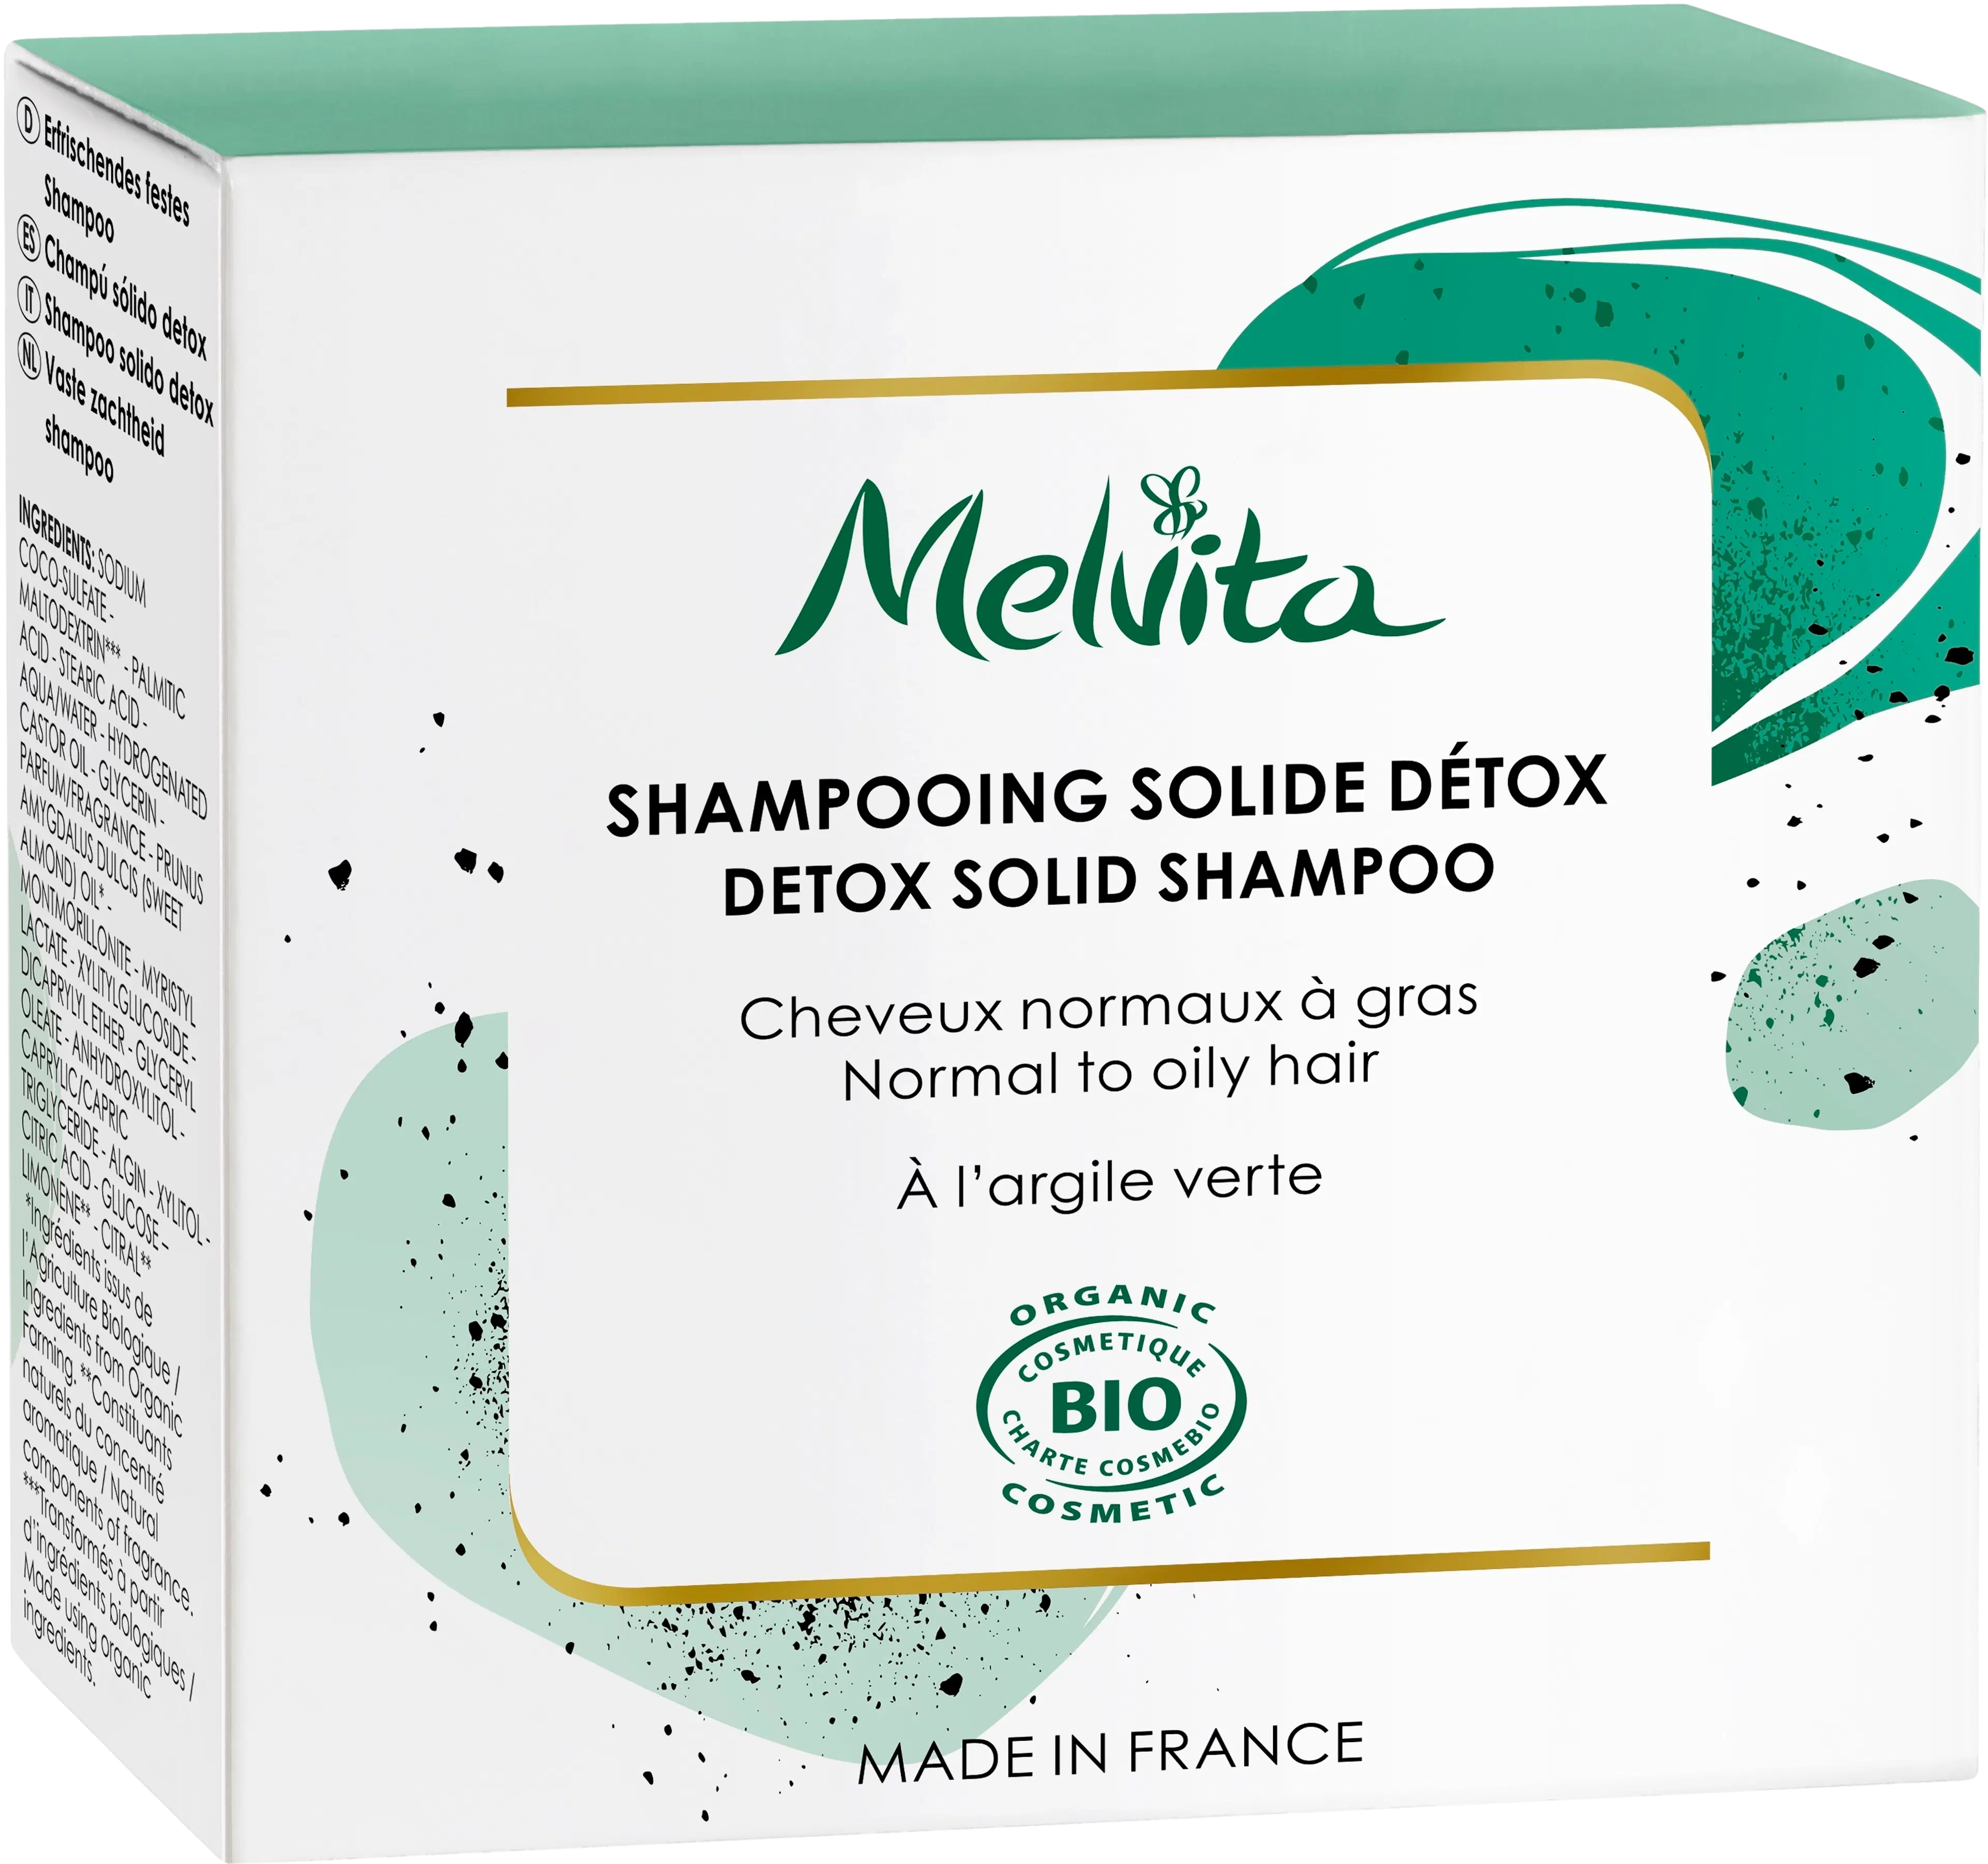 Melvita Detox Solid Shampoo palashampoo 55 g